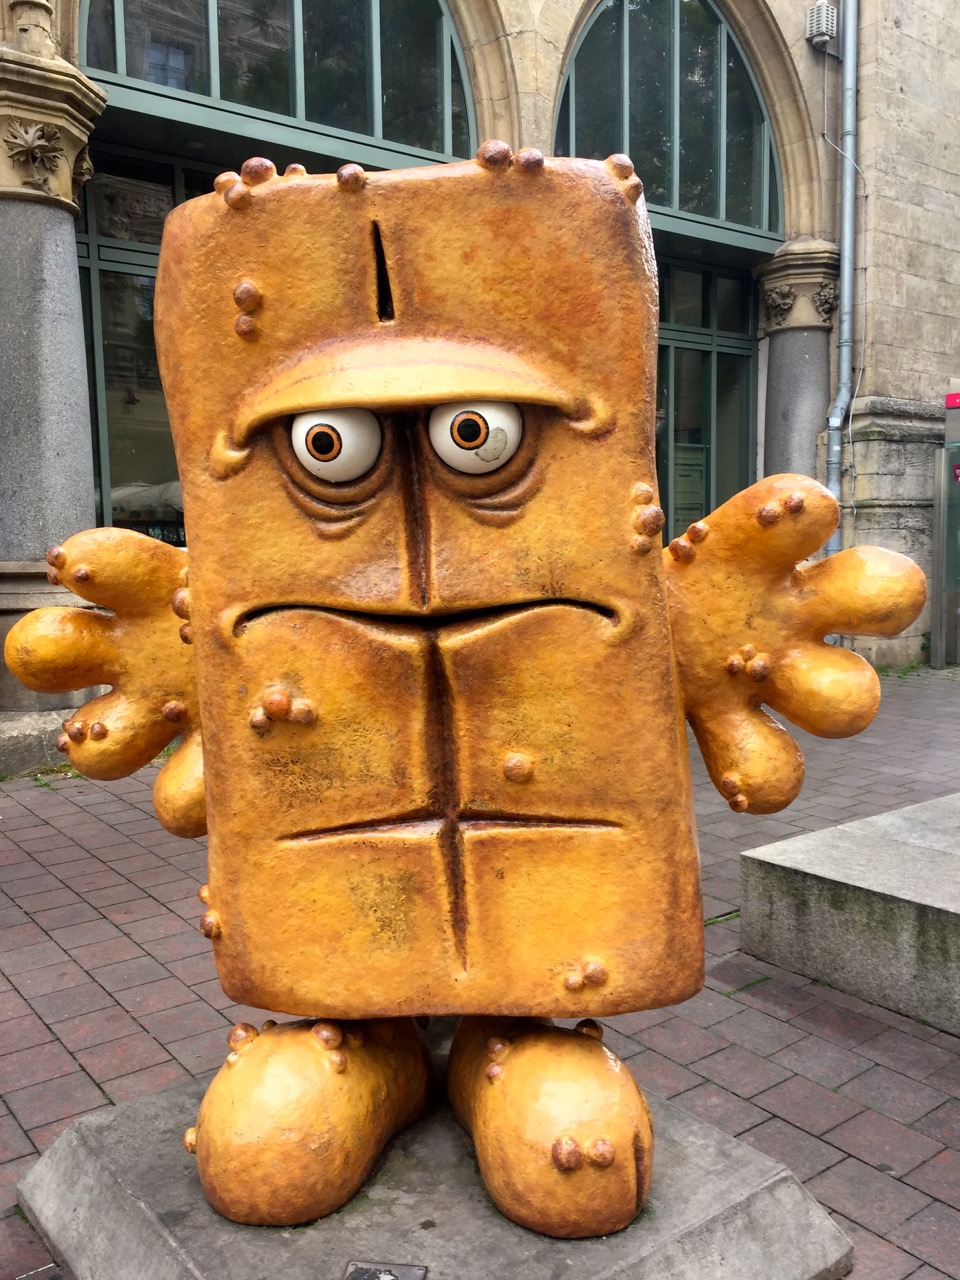 Prominenz in Erfurt – Bernd das Brot